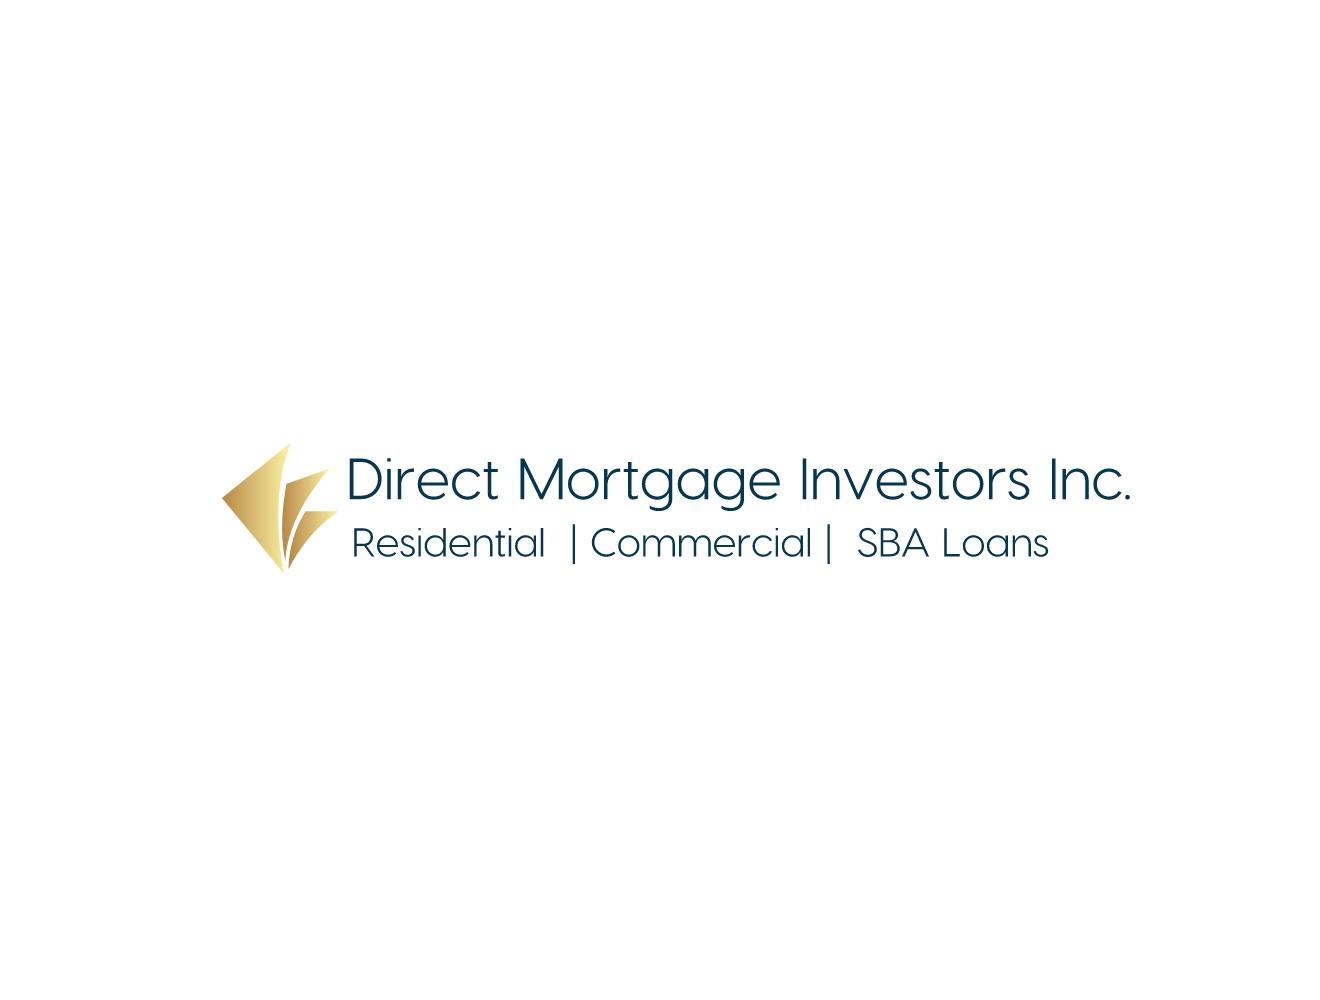 Direct Mortgage Investors Inc Logo